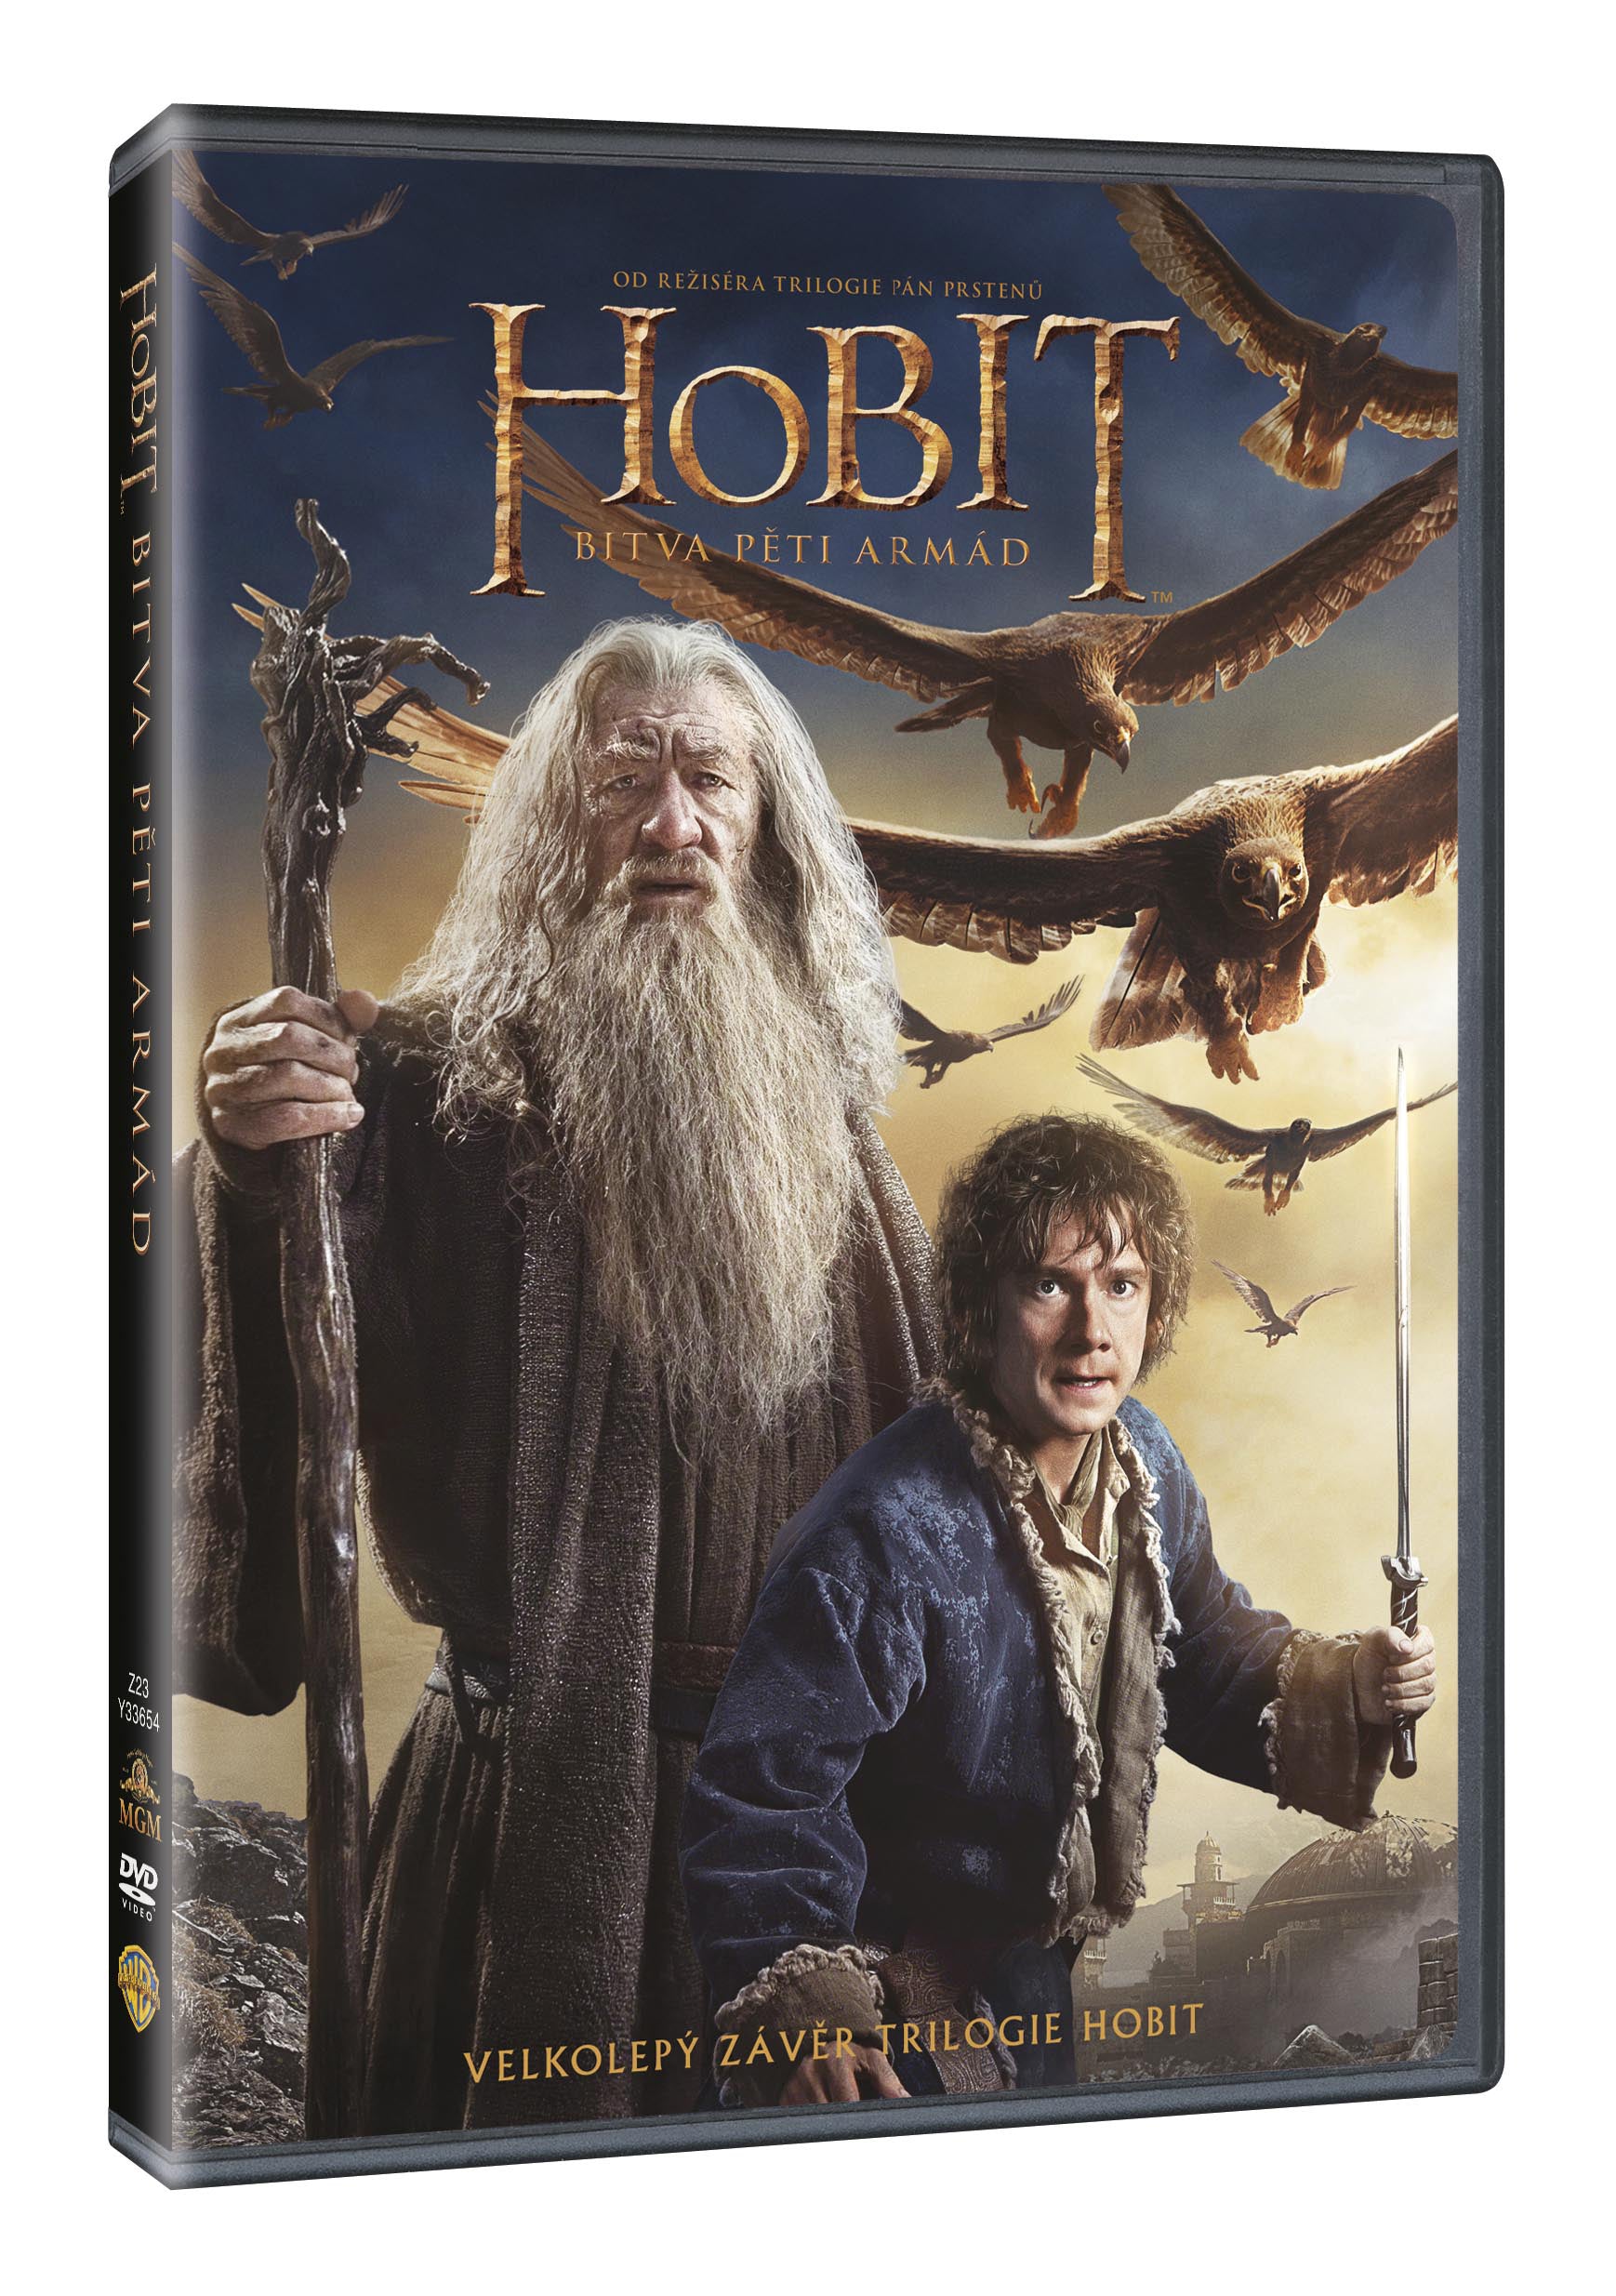 Hobit: Bitva peti armad DVD / The Hobbit: The Battle of the Five Armies